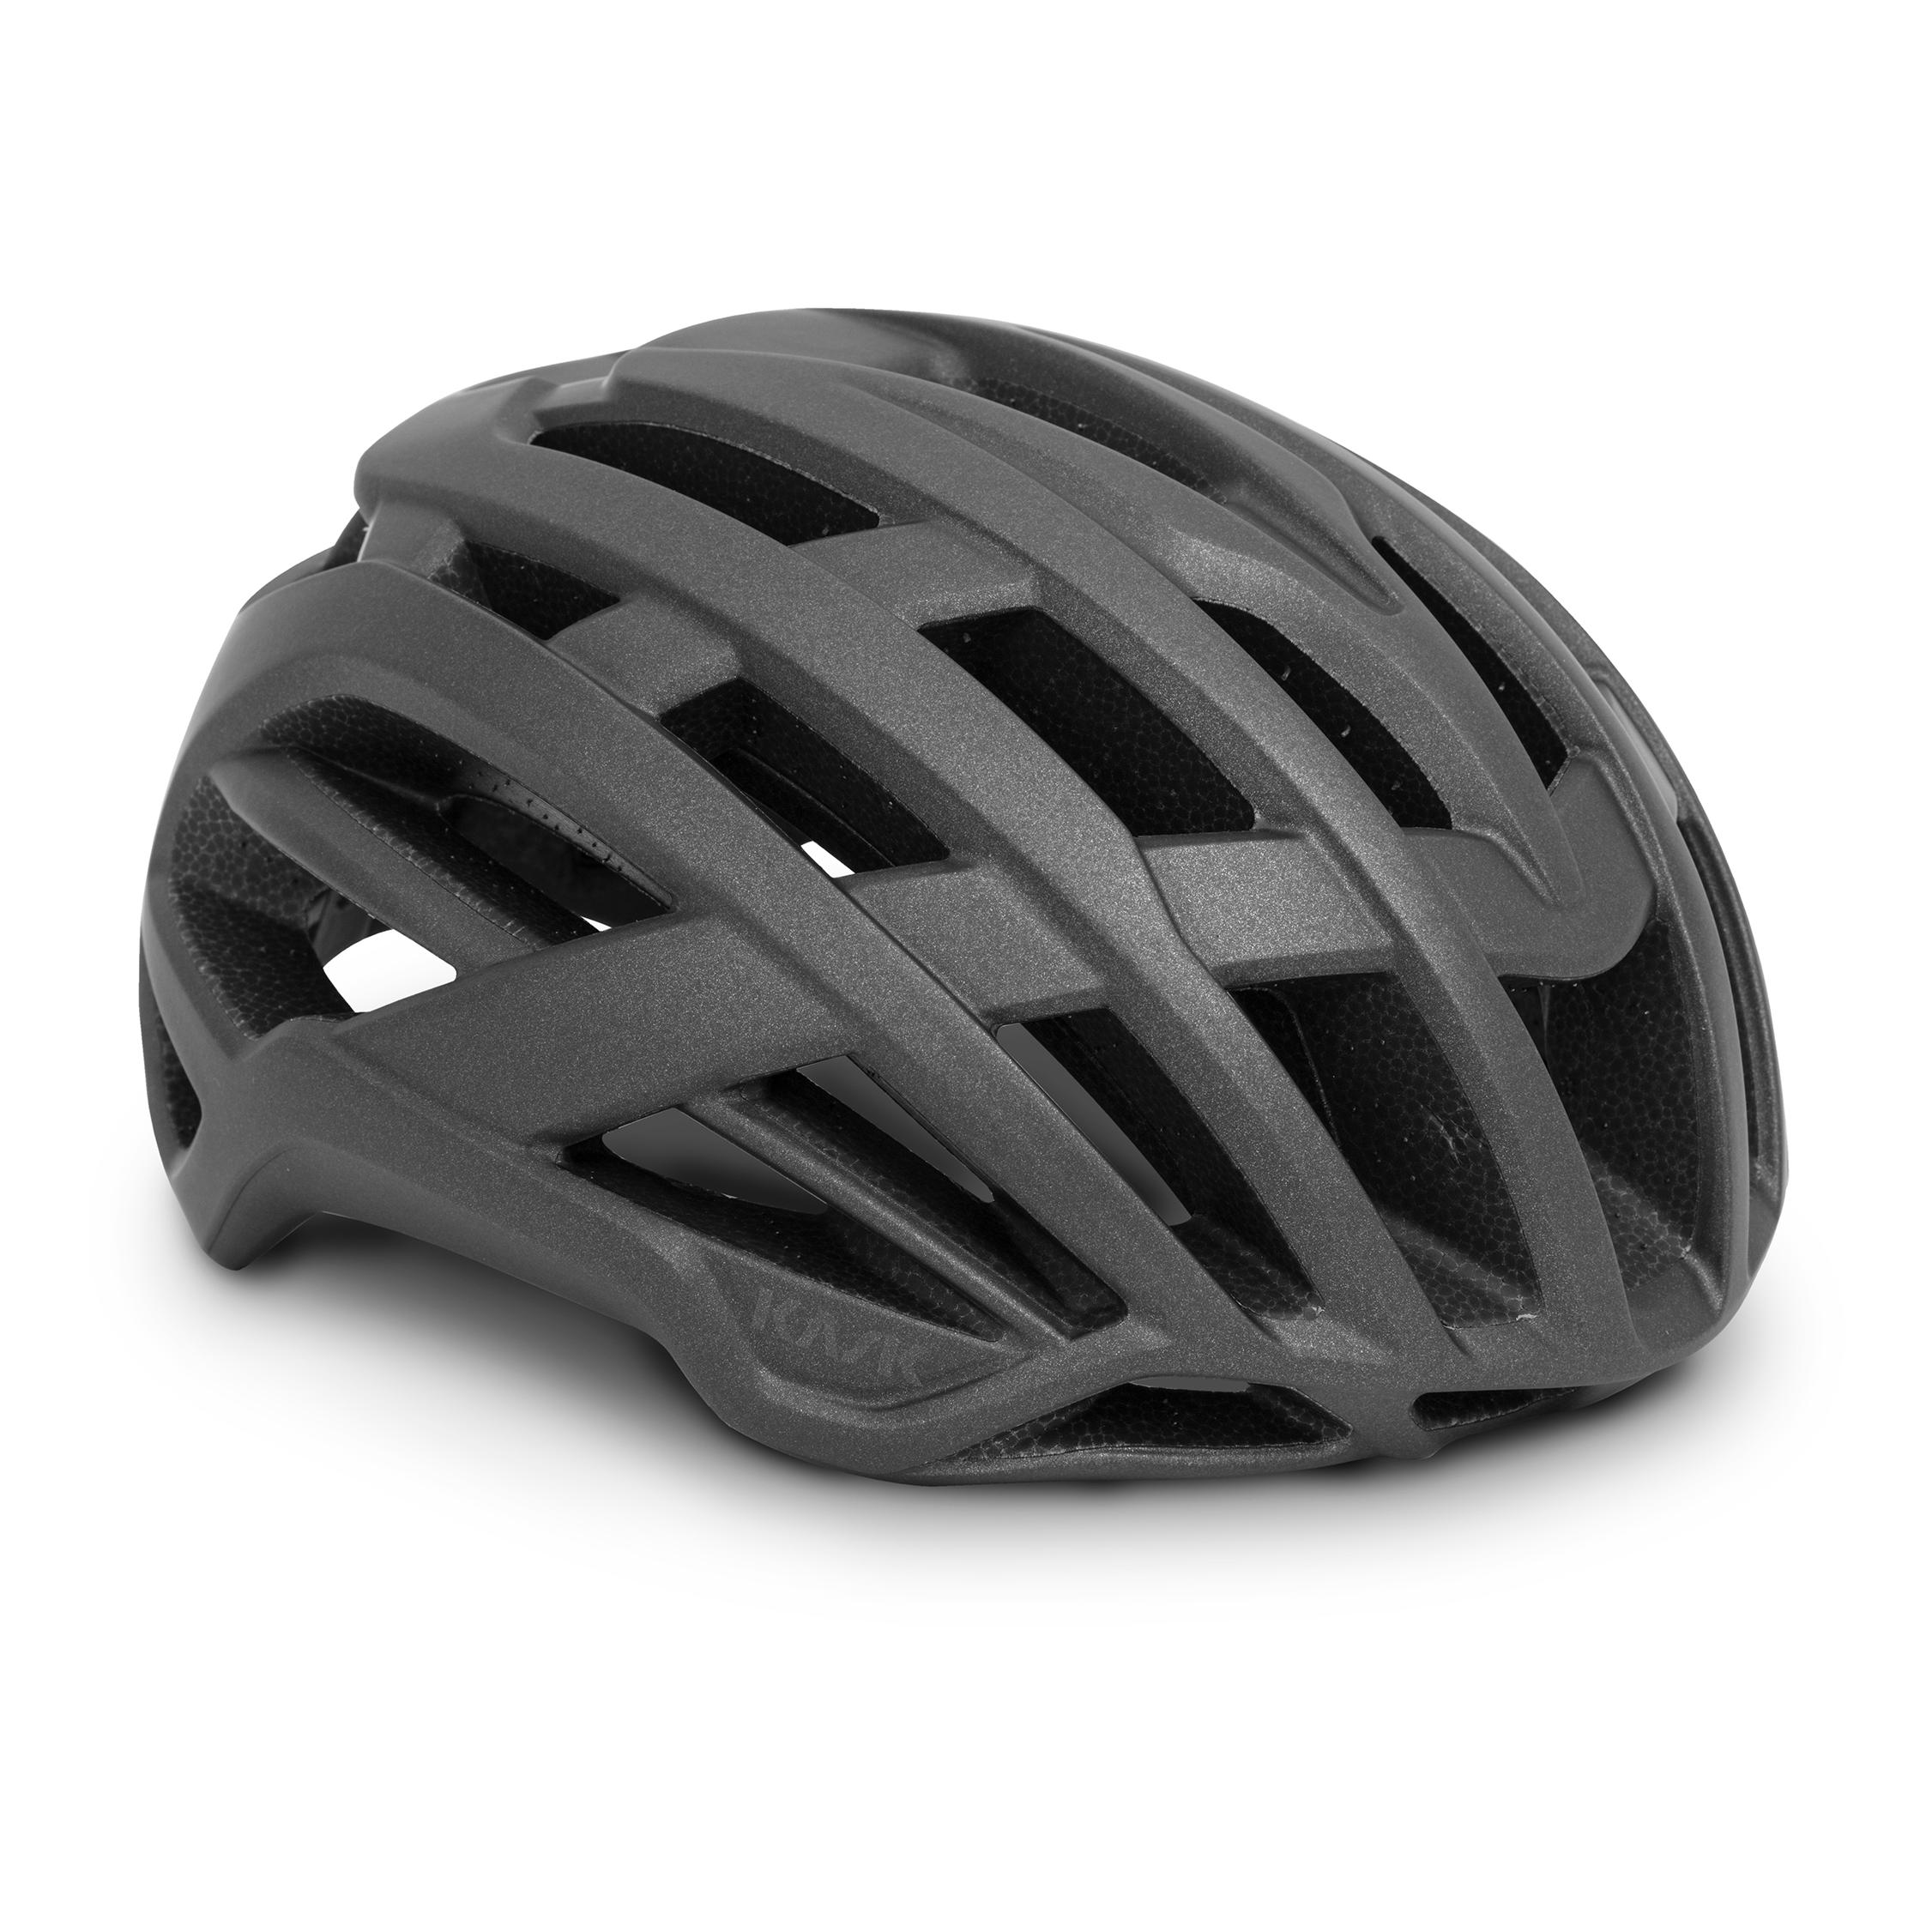 NEW Kask Valegro Road Helmet Matte Anthracite Medium 52-58 cm CHE00052.287